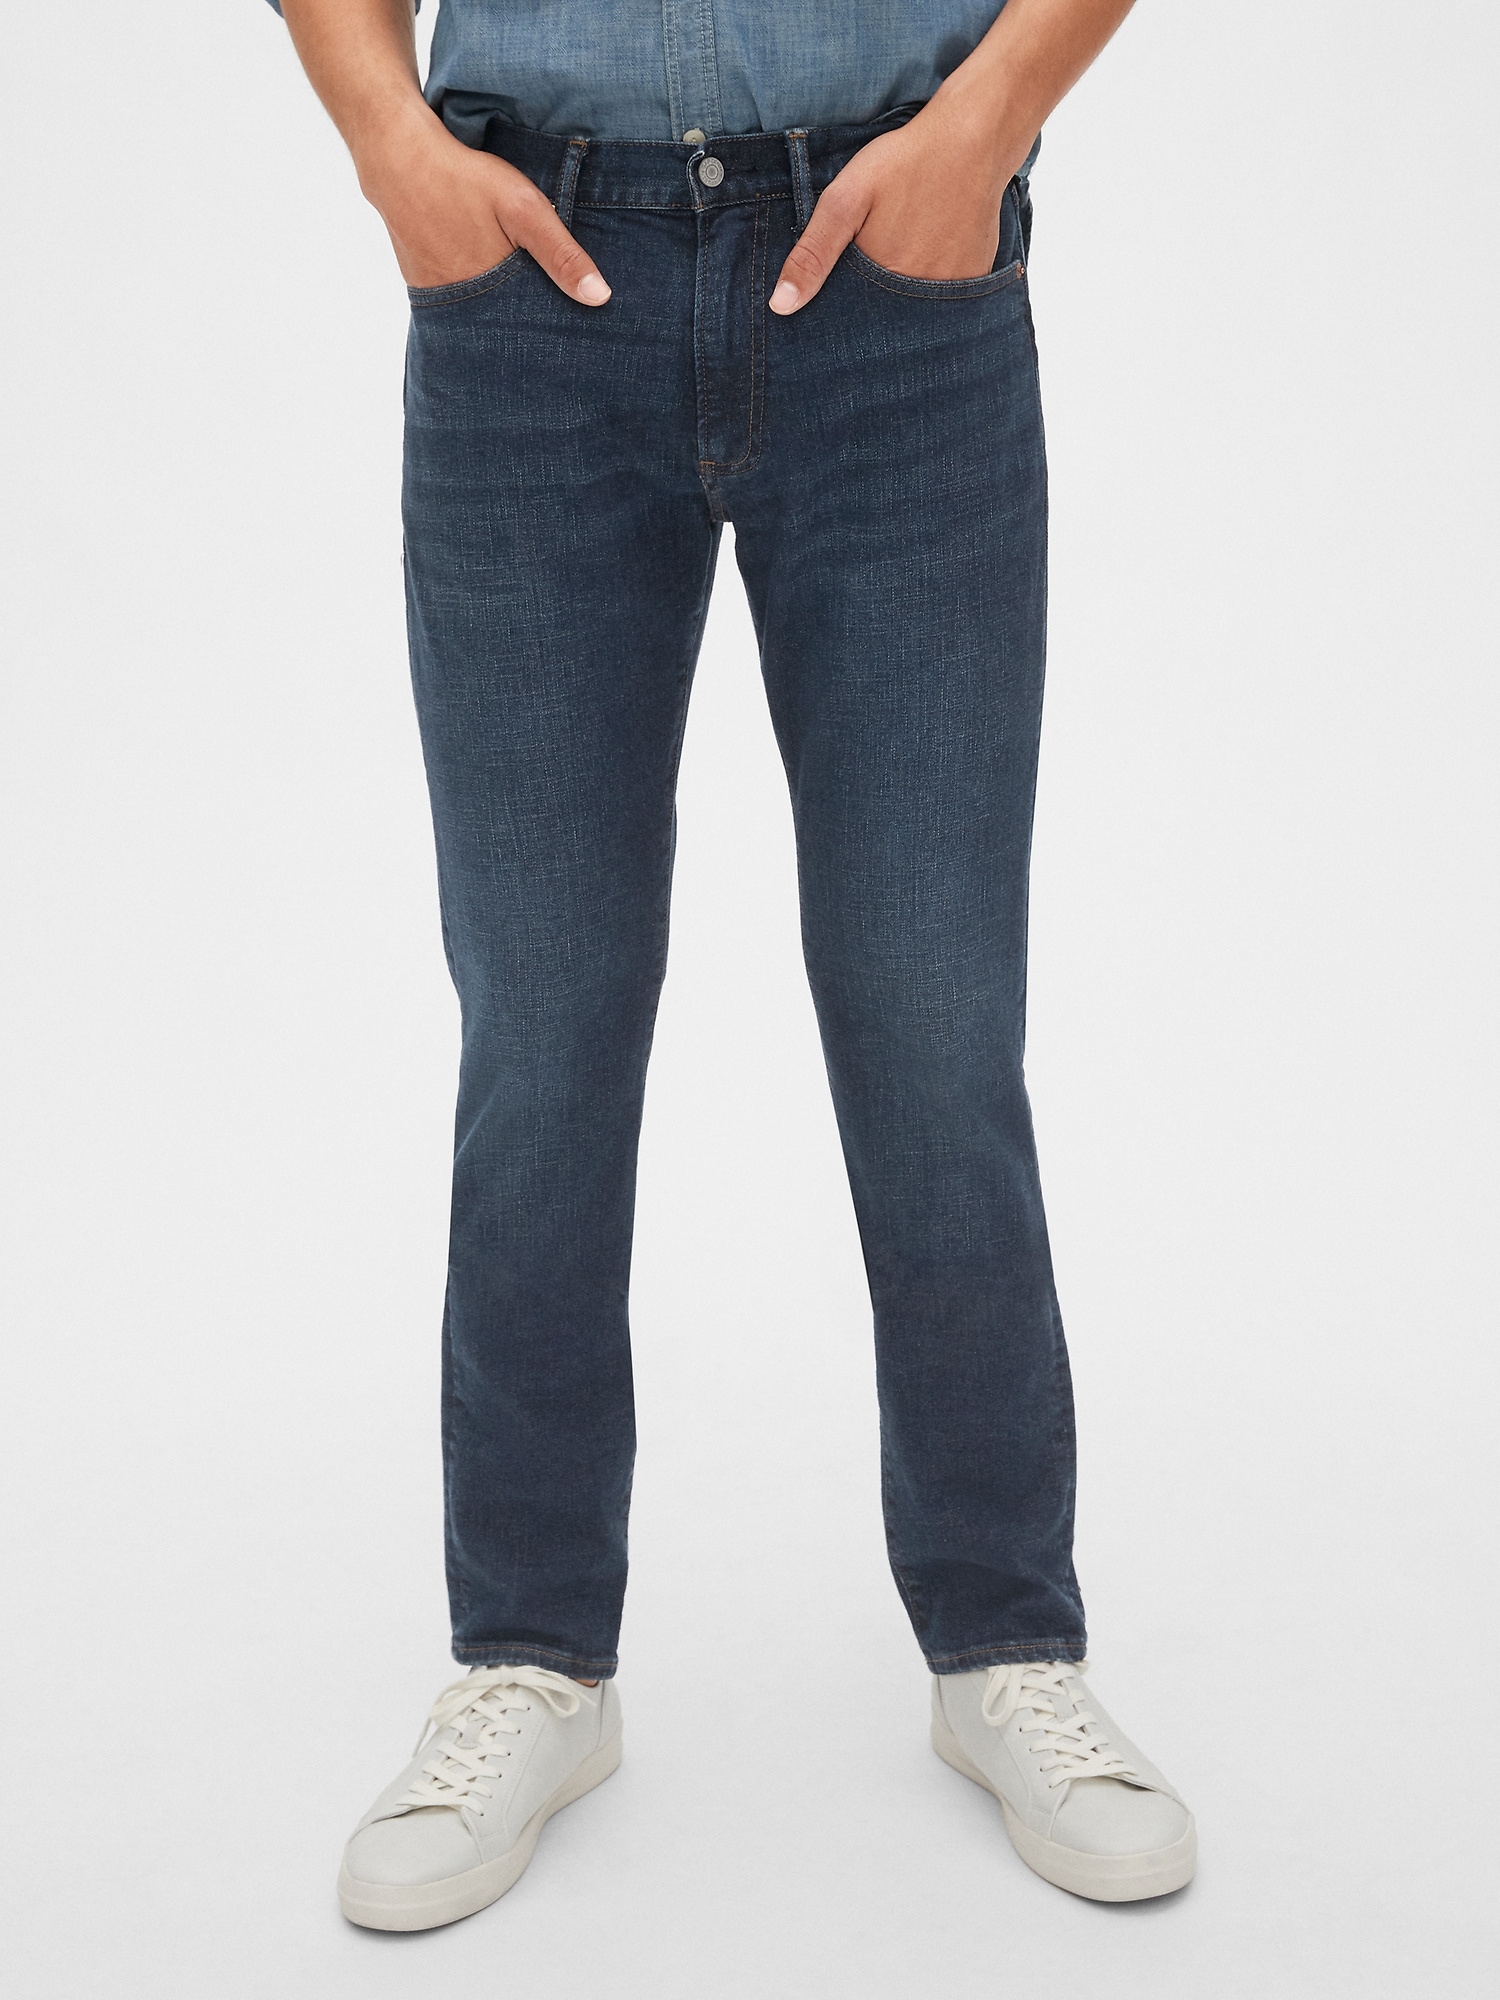 gapflex jeans